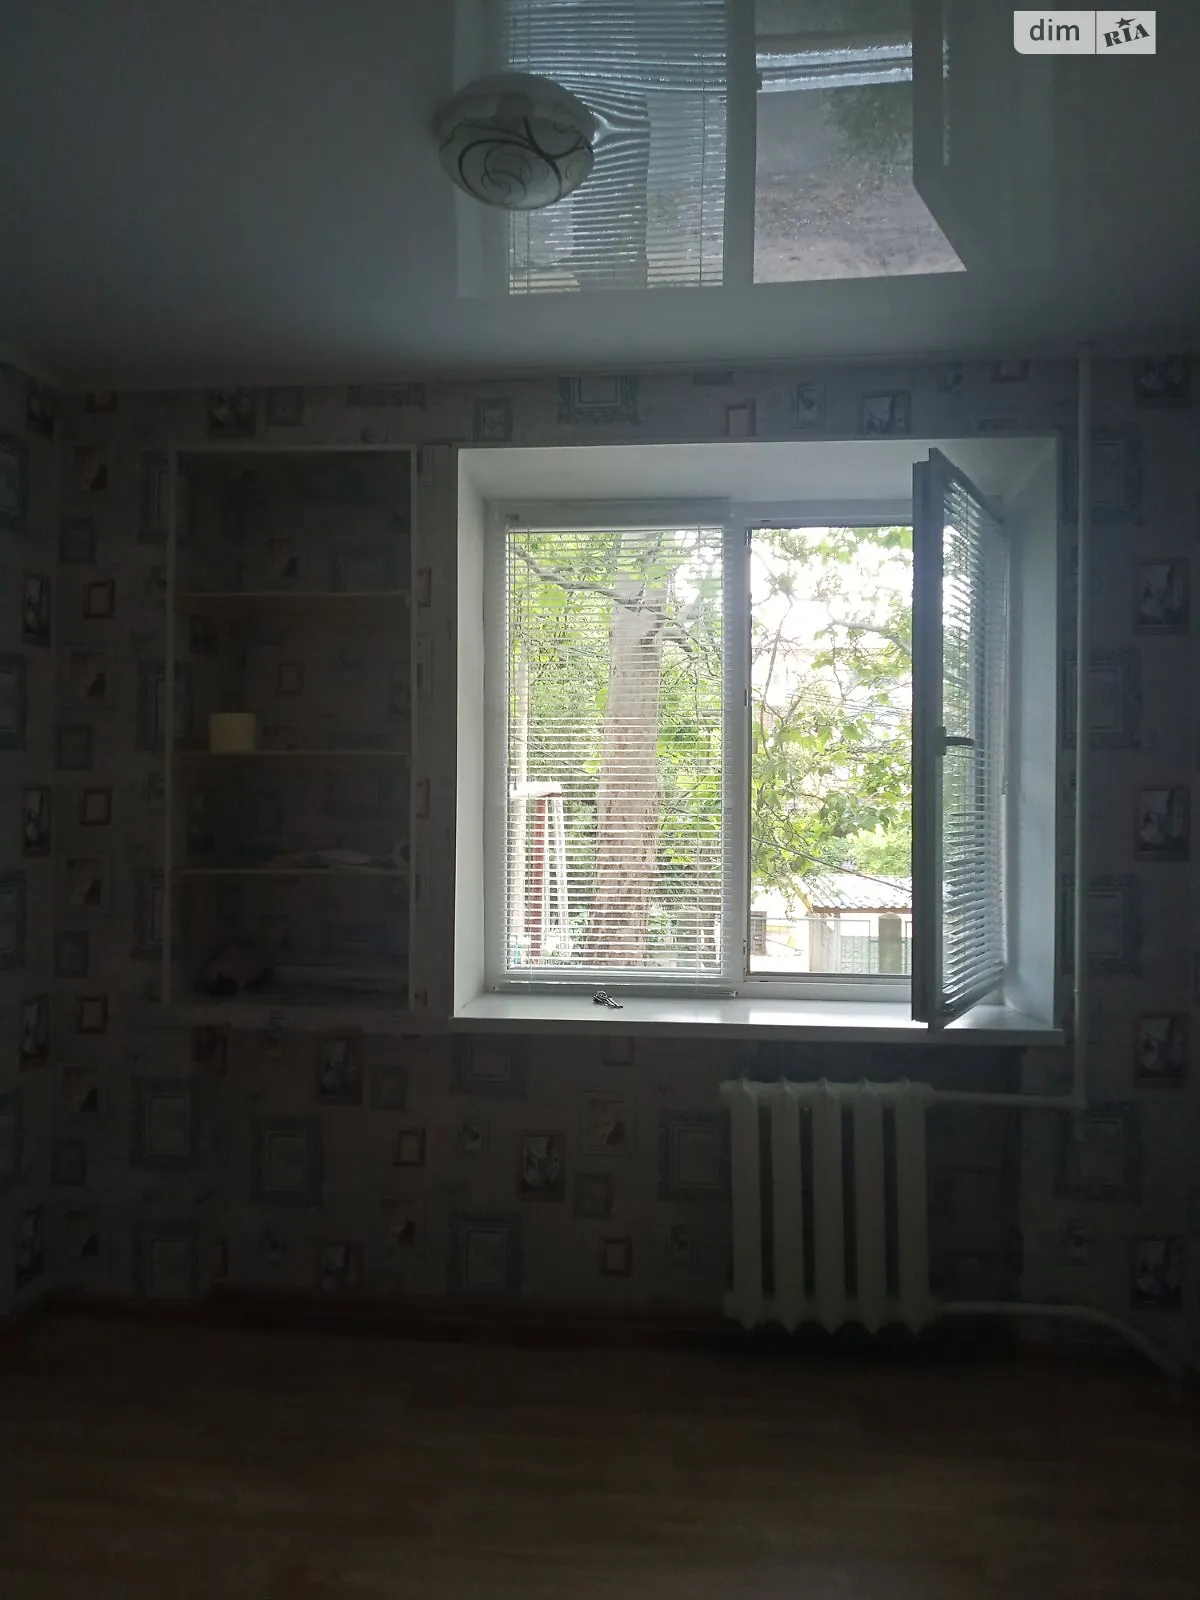 Продается комната 21 кв. м в Николаеве - фото 3